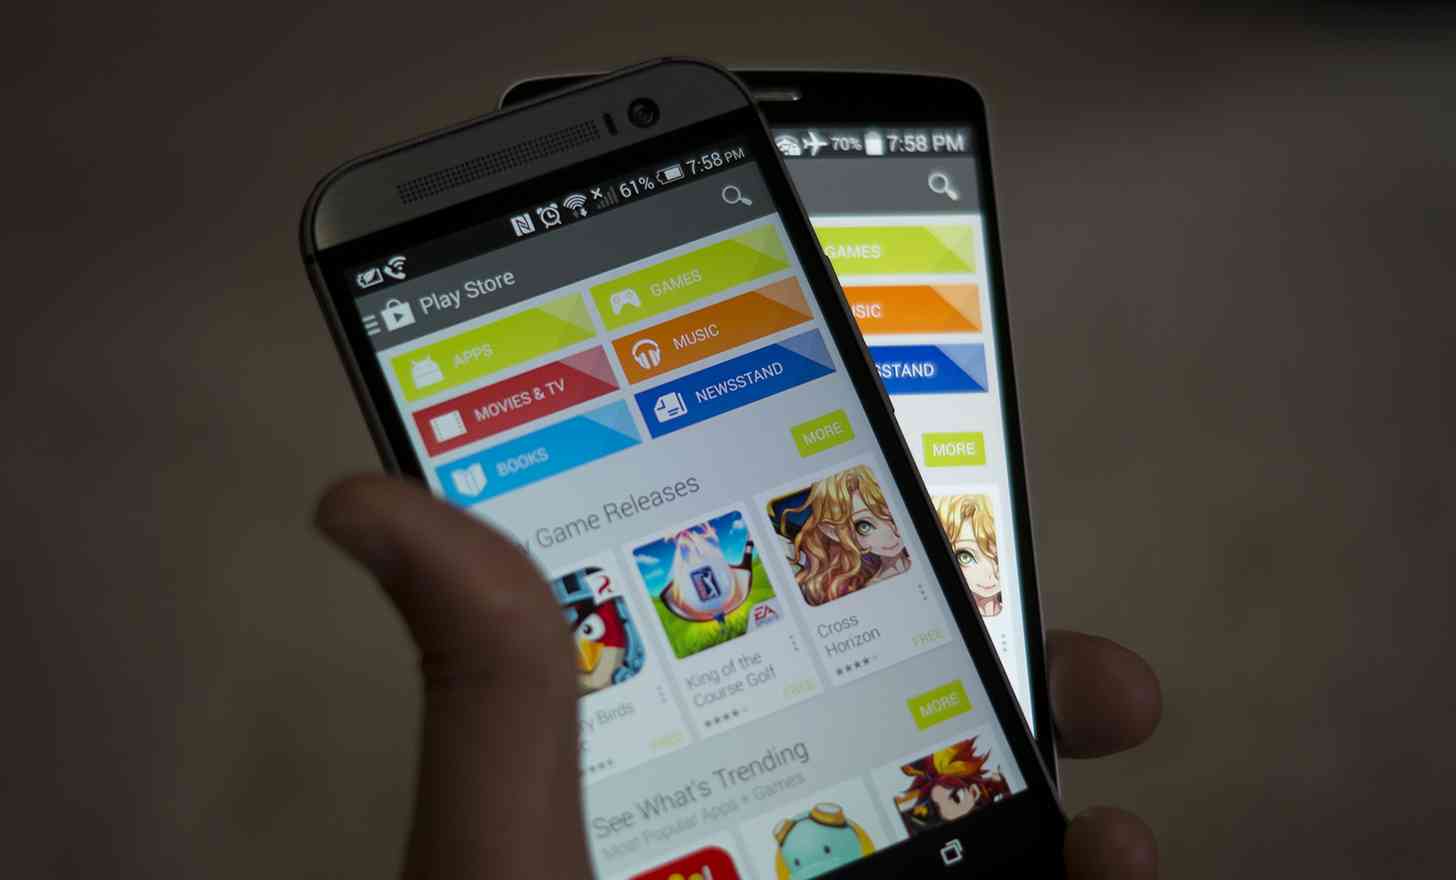 Google Play store HTC One M8 LG G3